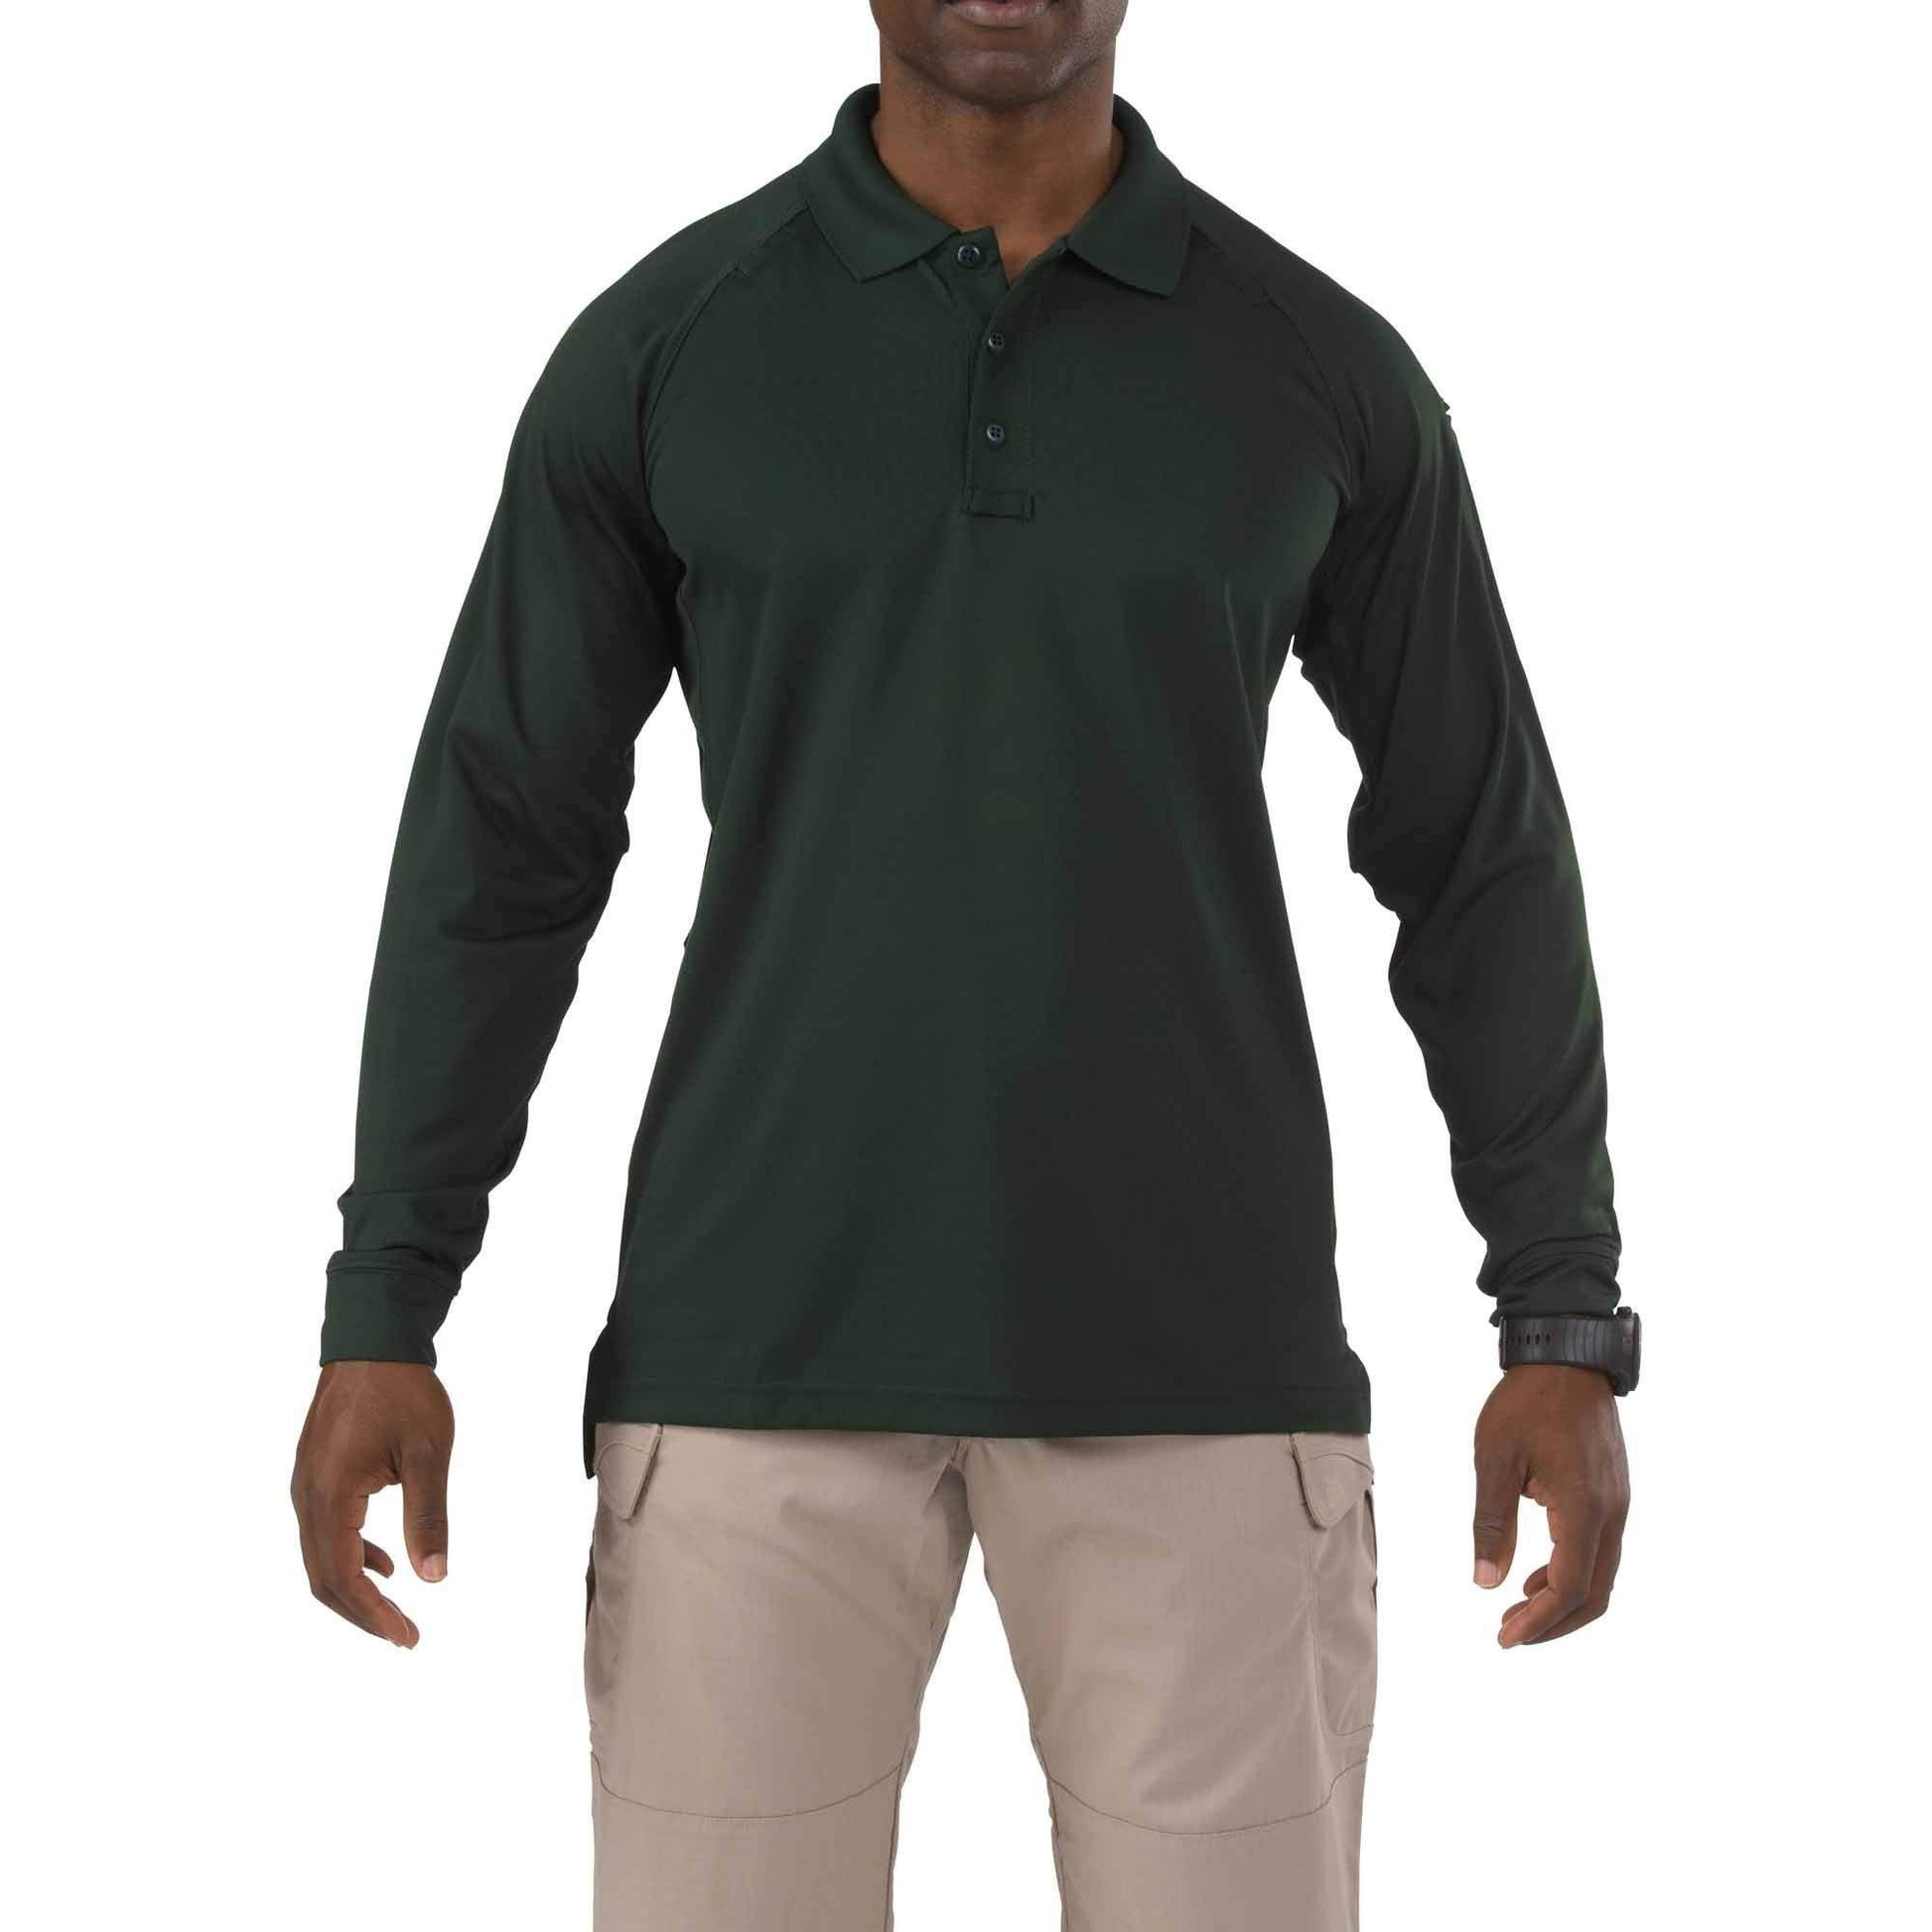 5.11 Tactical Performance Long Sleeve Polo Shirts L.E. Green Small Tactical Distributors Ltd New Zealand